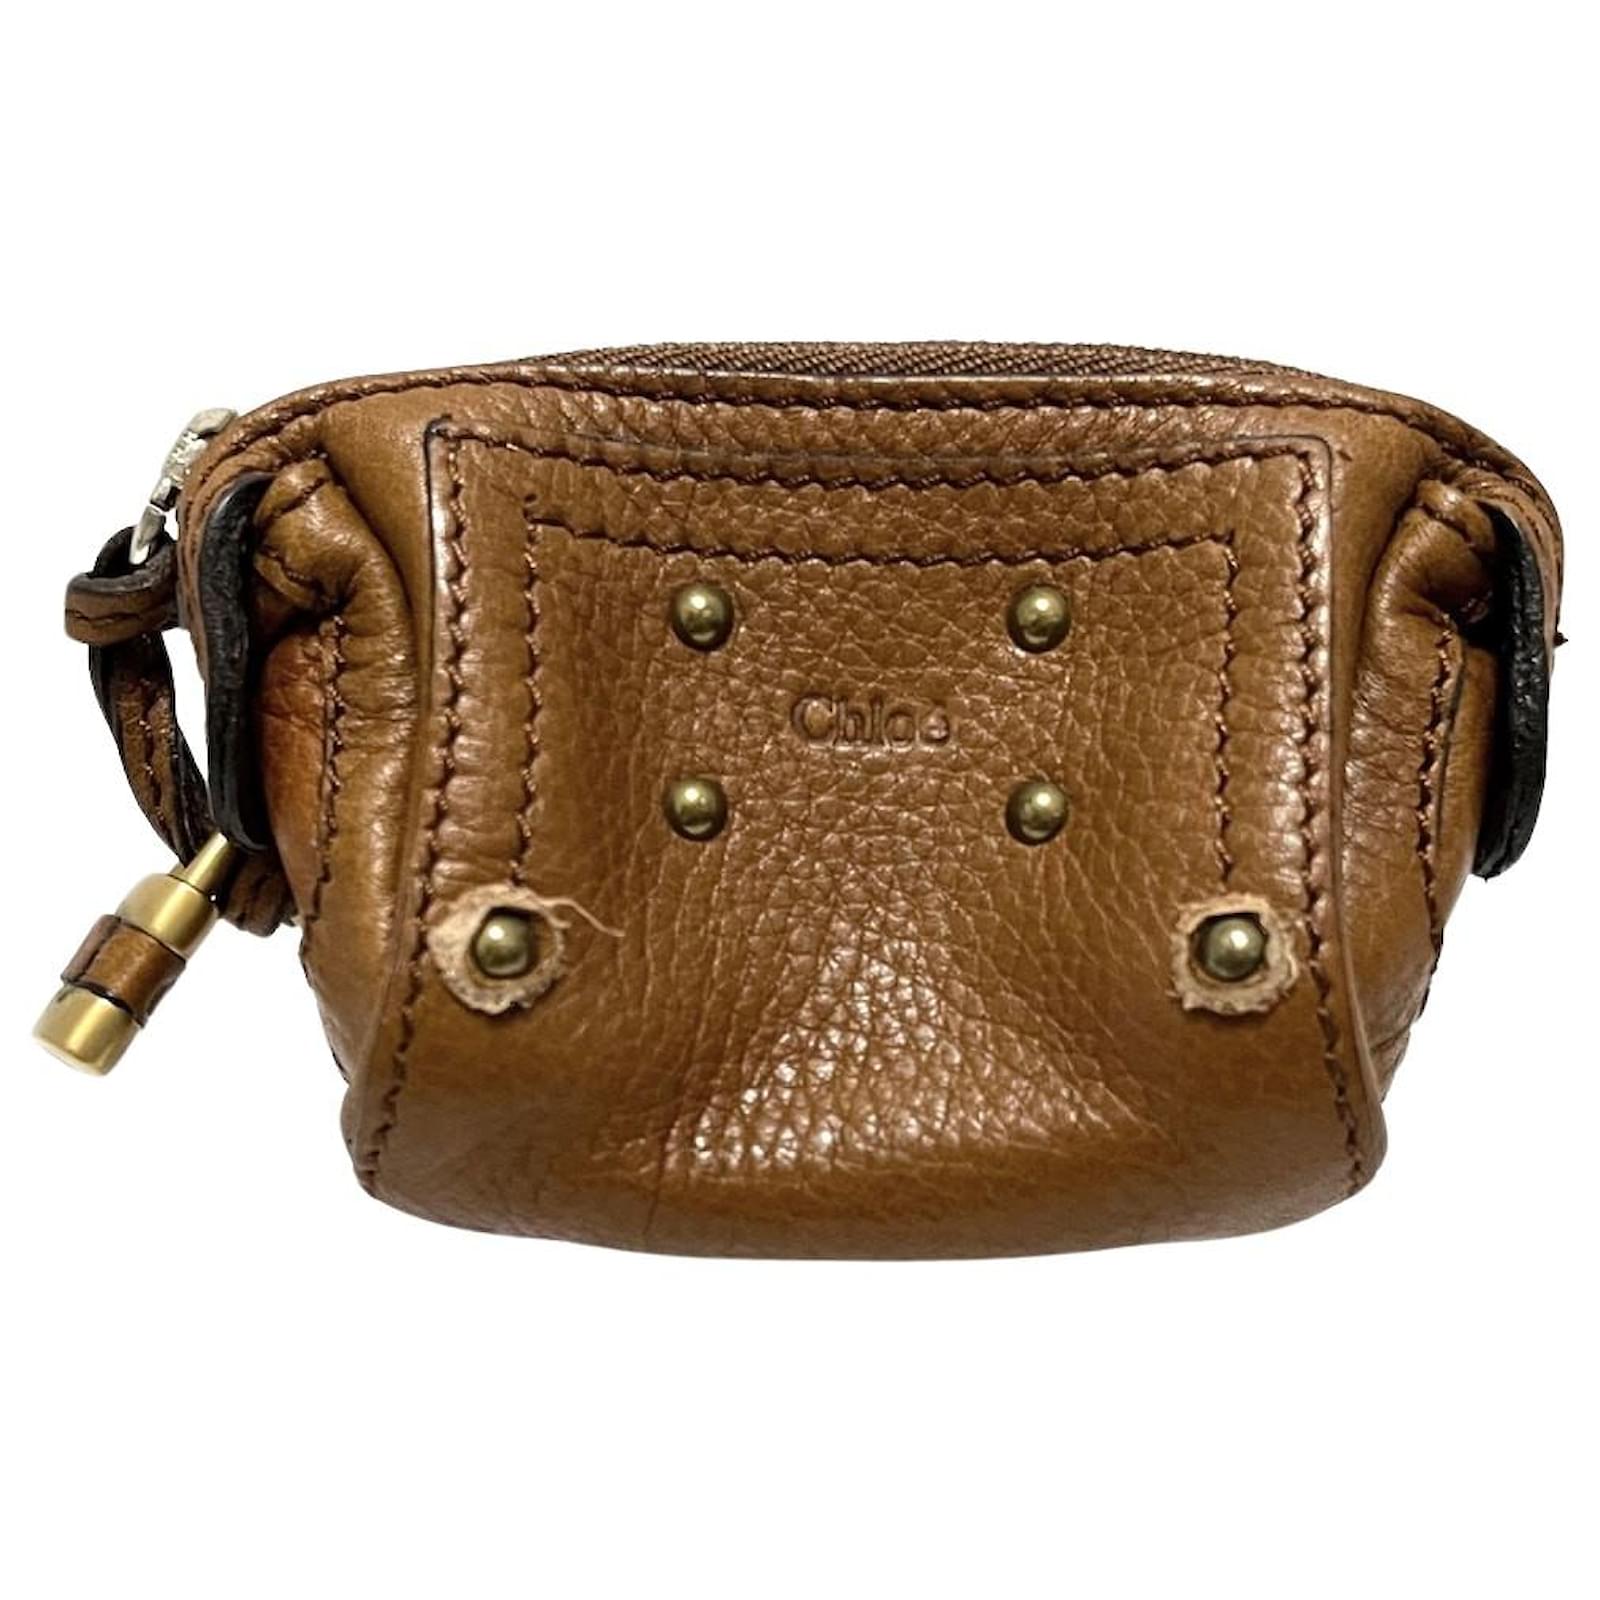 brown leather chloe paddington purses wallets cases